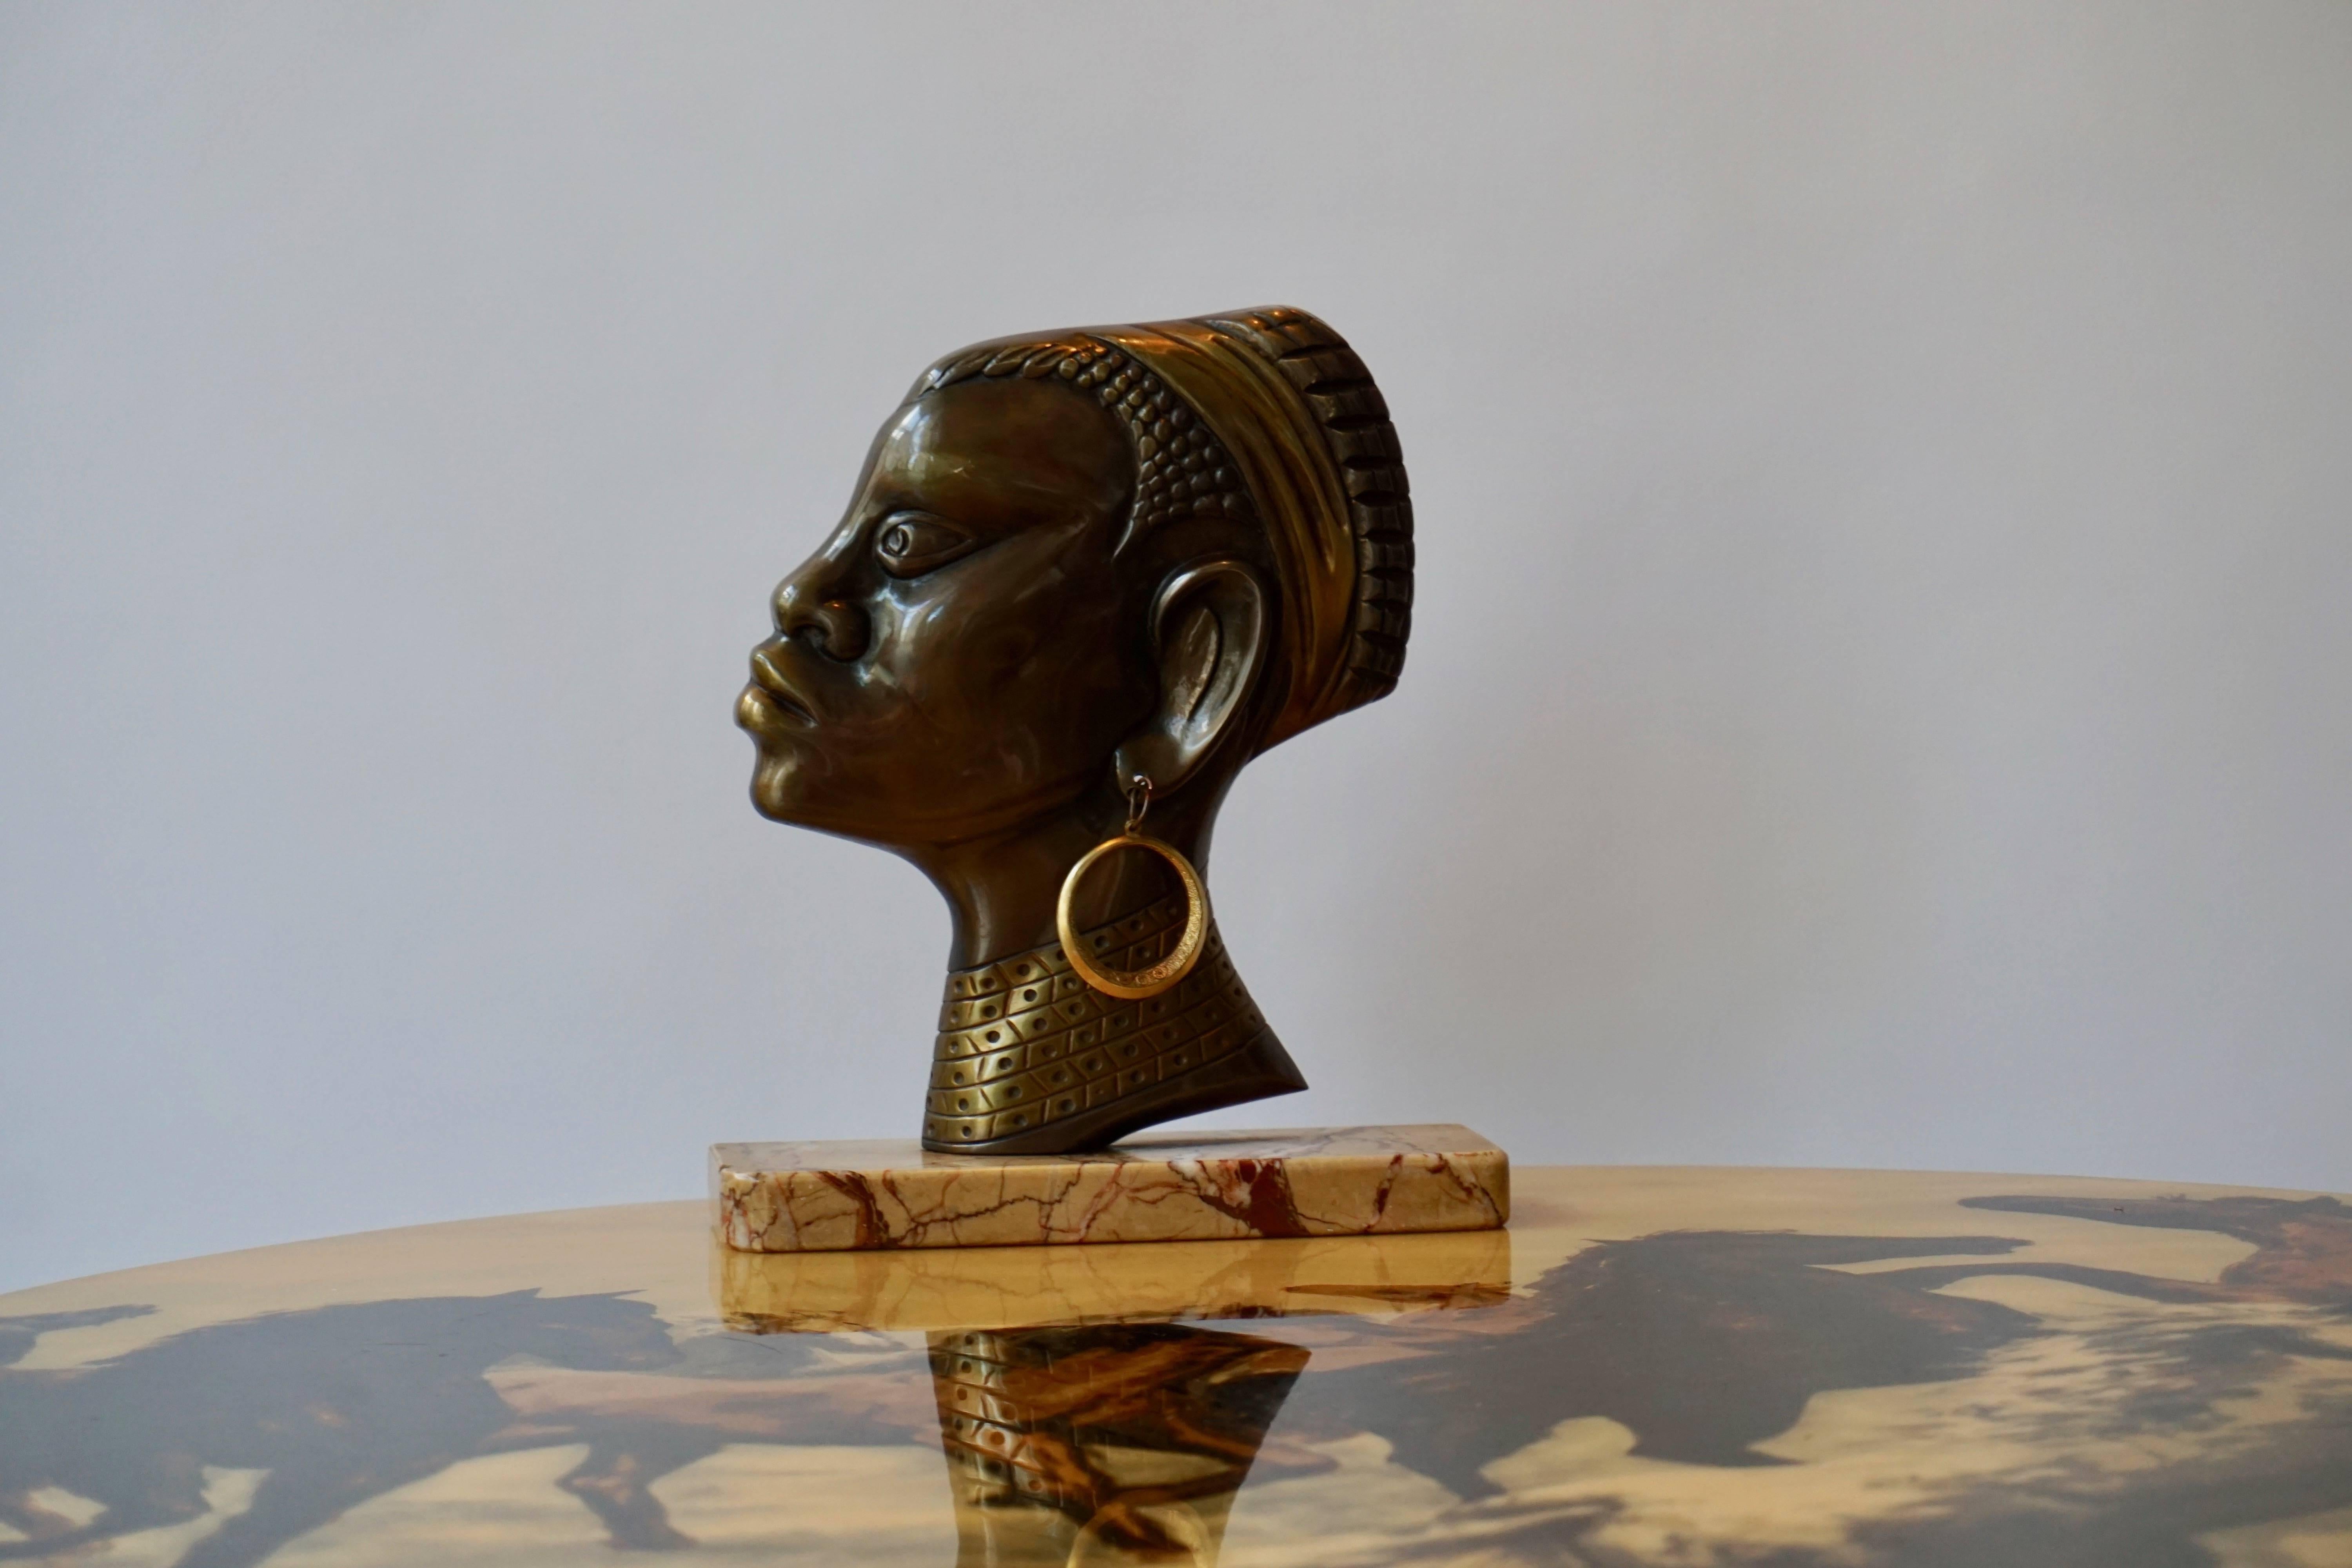 African sculpture on marble base.
Measures: Height 25 cm.
Width 20 cm.
Depth 7 cm.